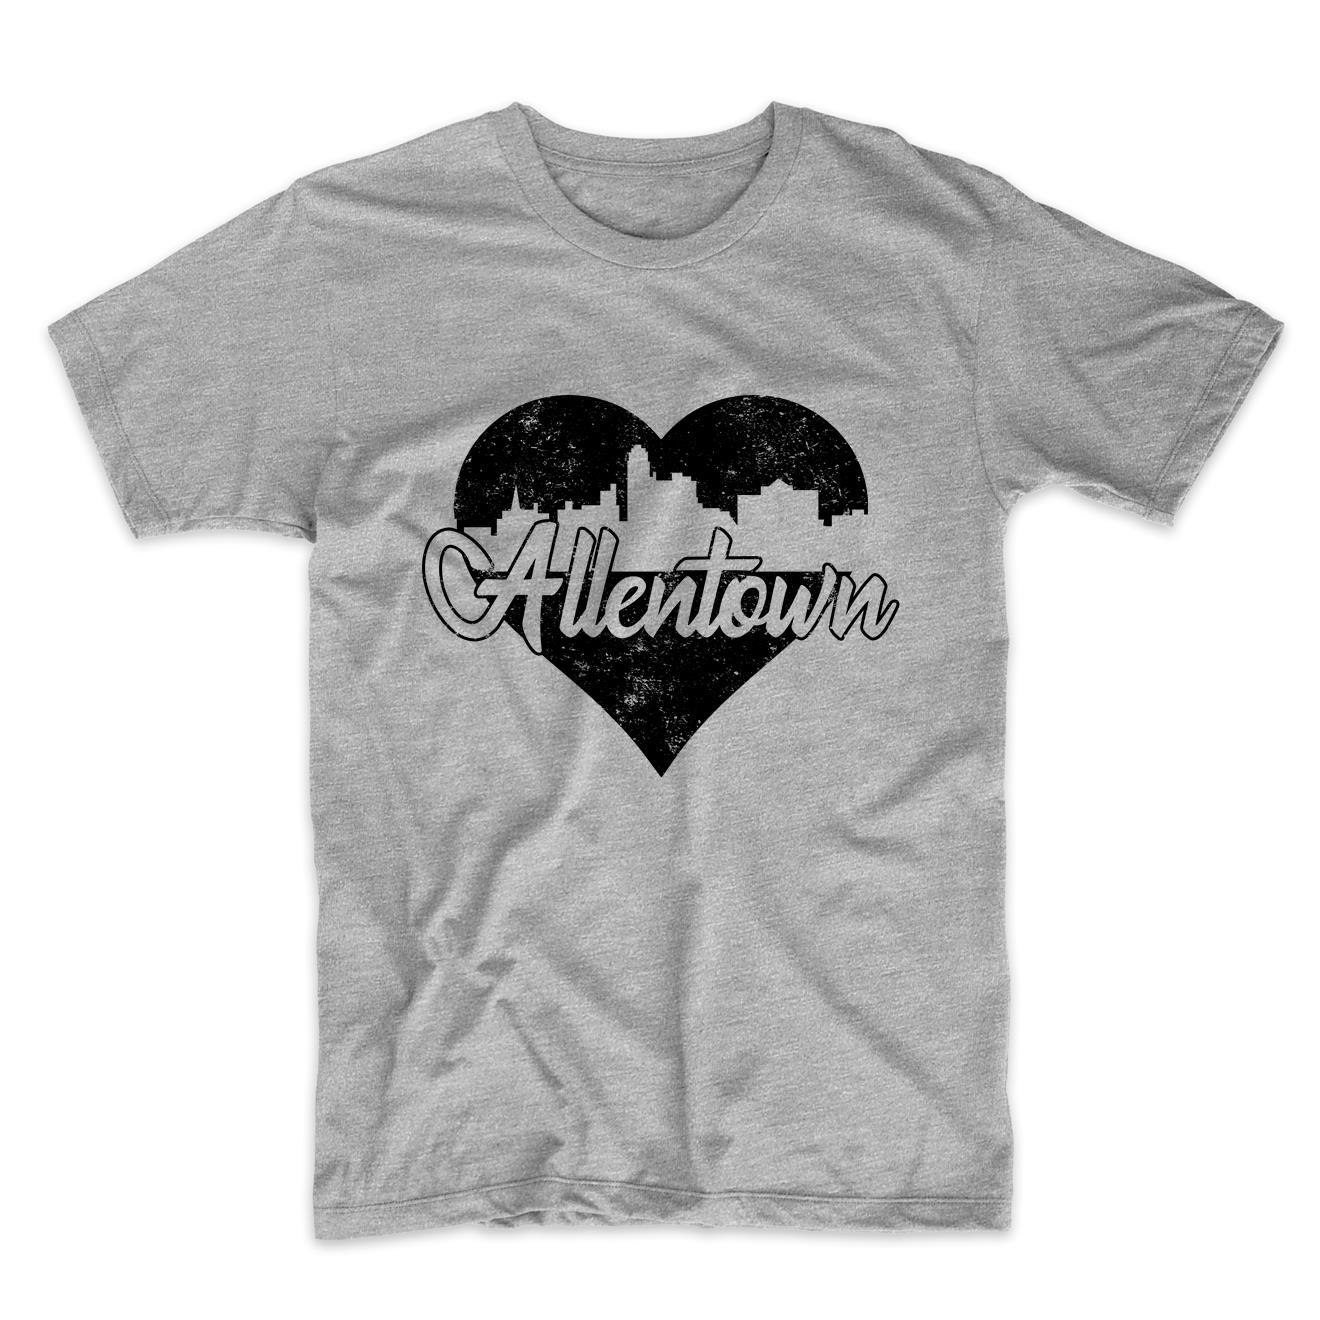 Retro Allentown Pennsylvania Skyline Heart Distressed T-Shirt